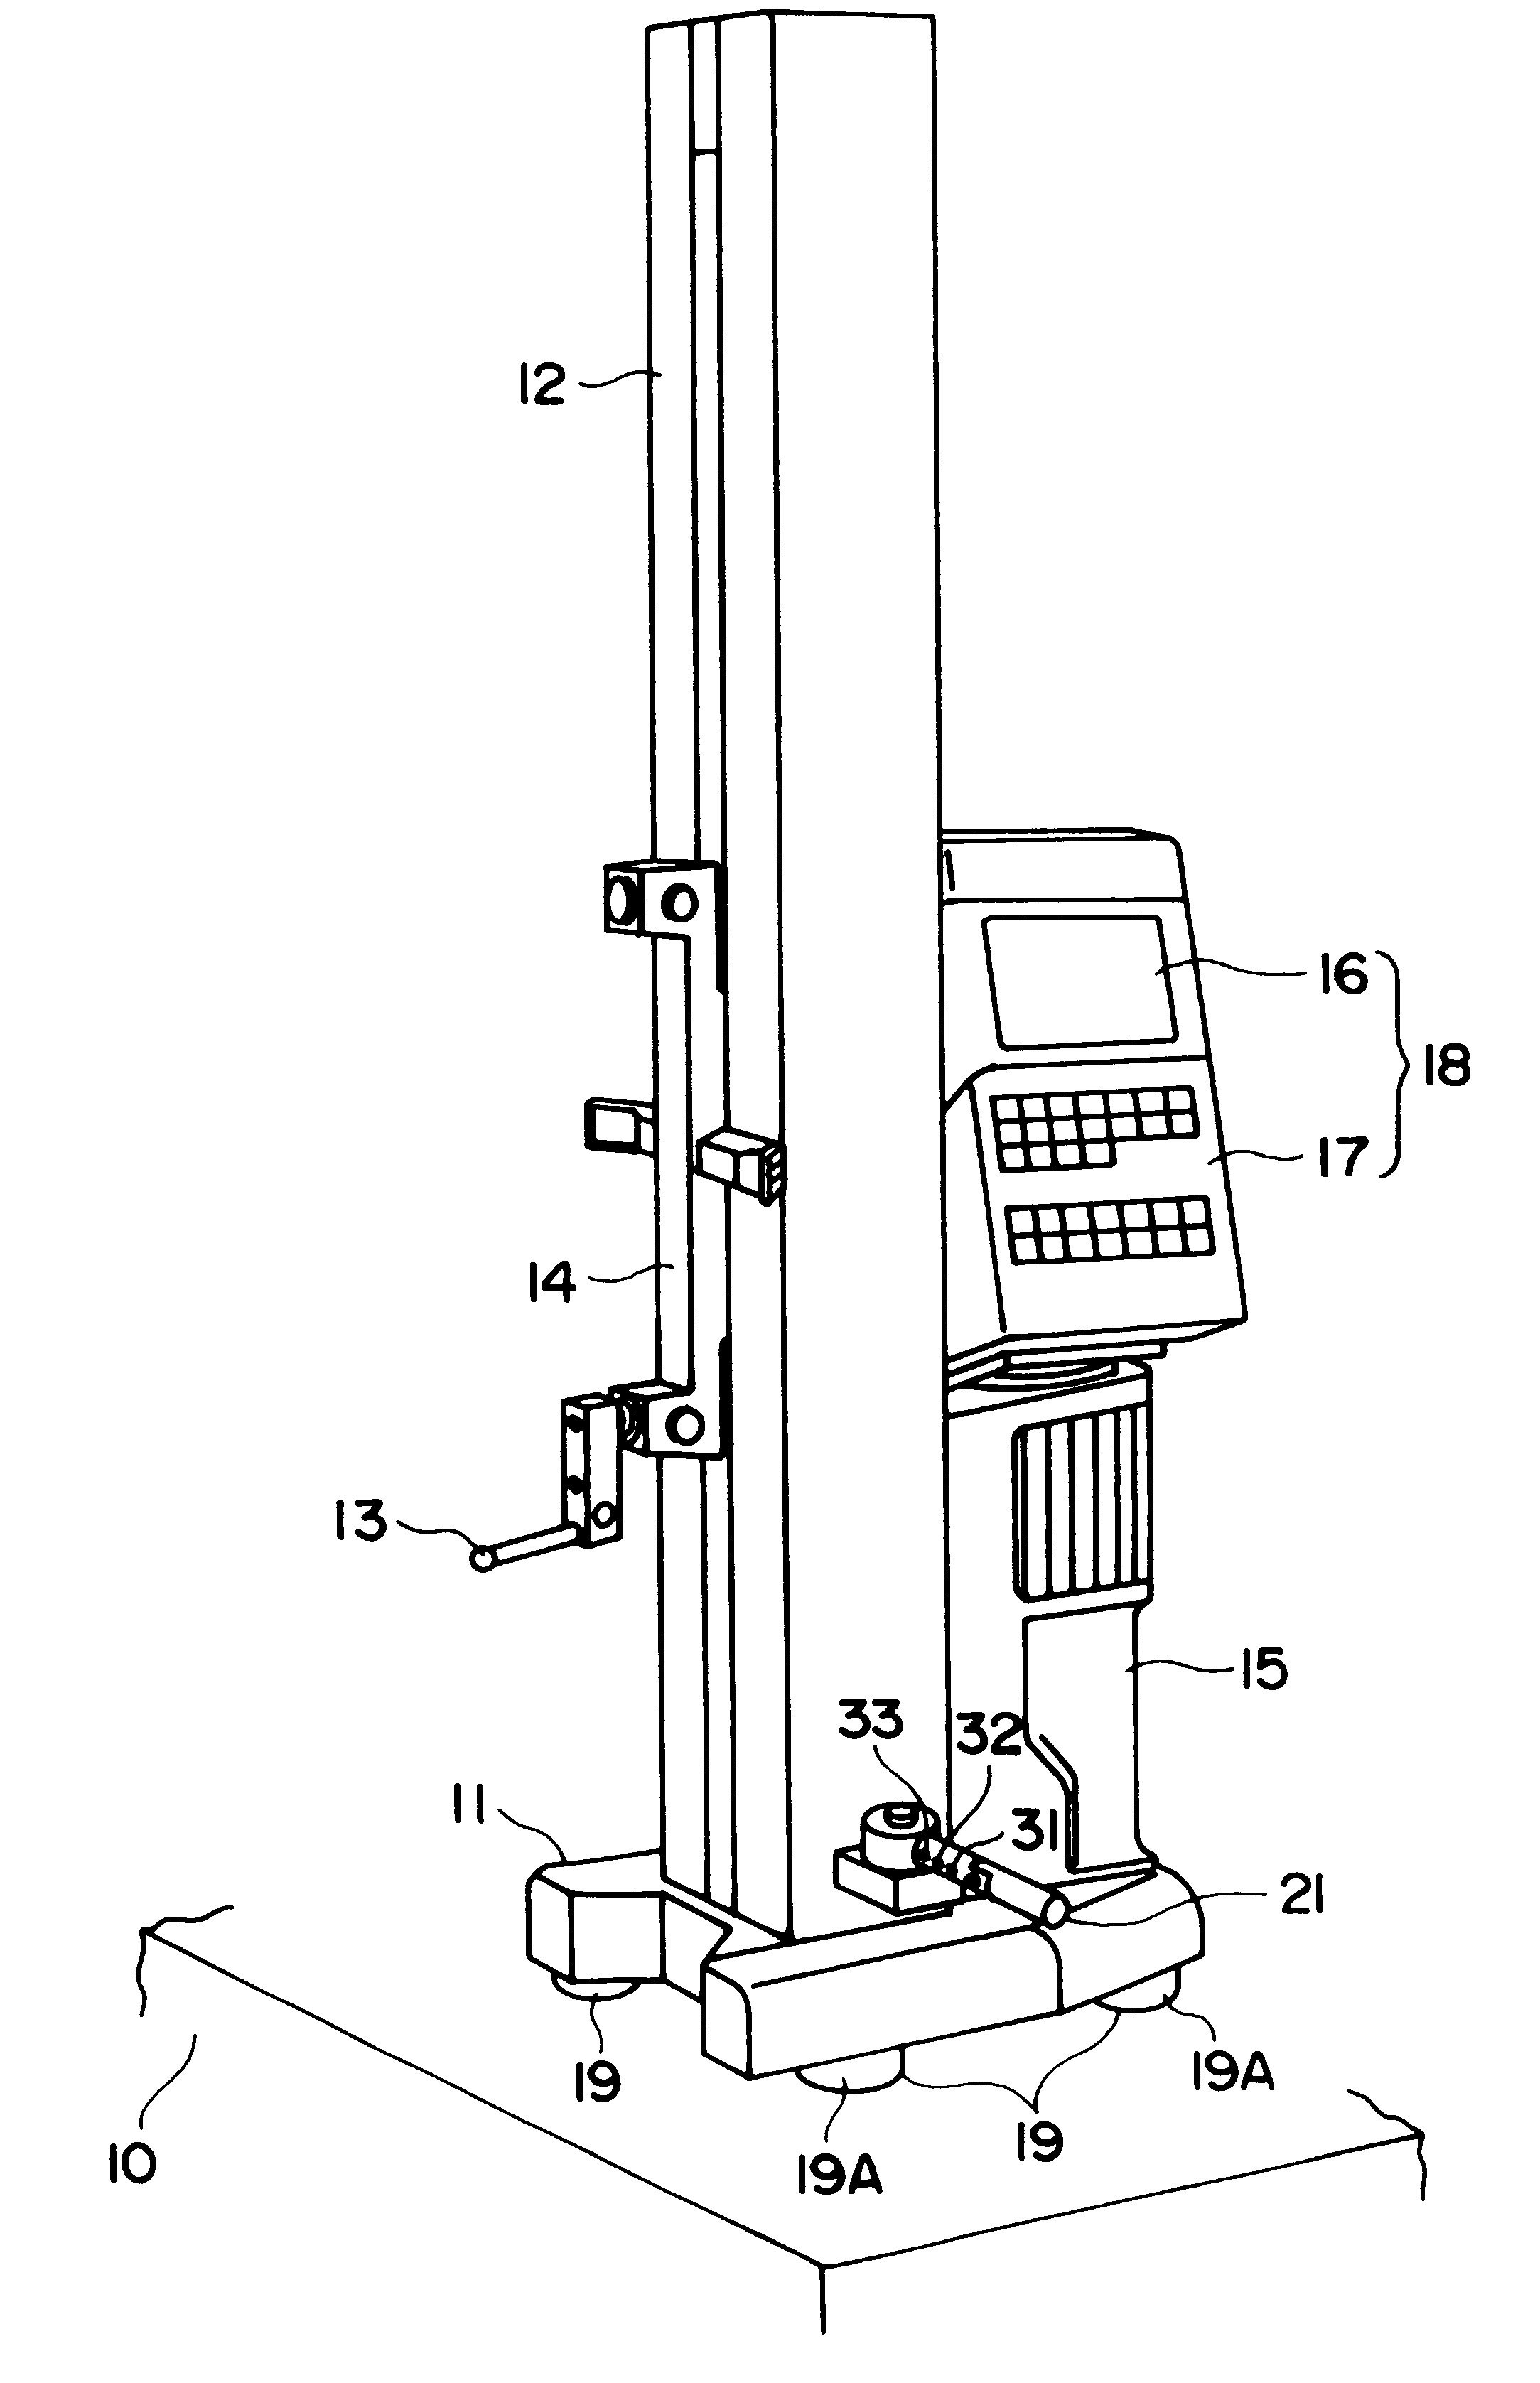 Linear measuring machine